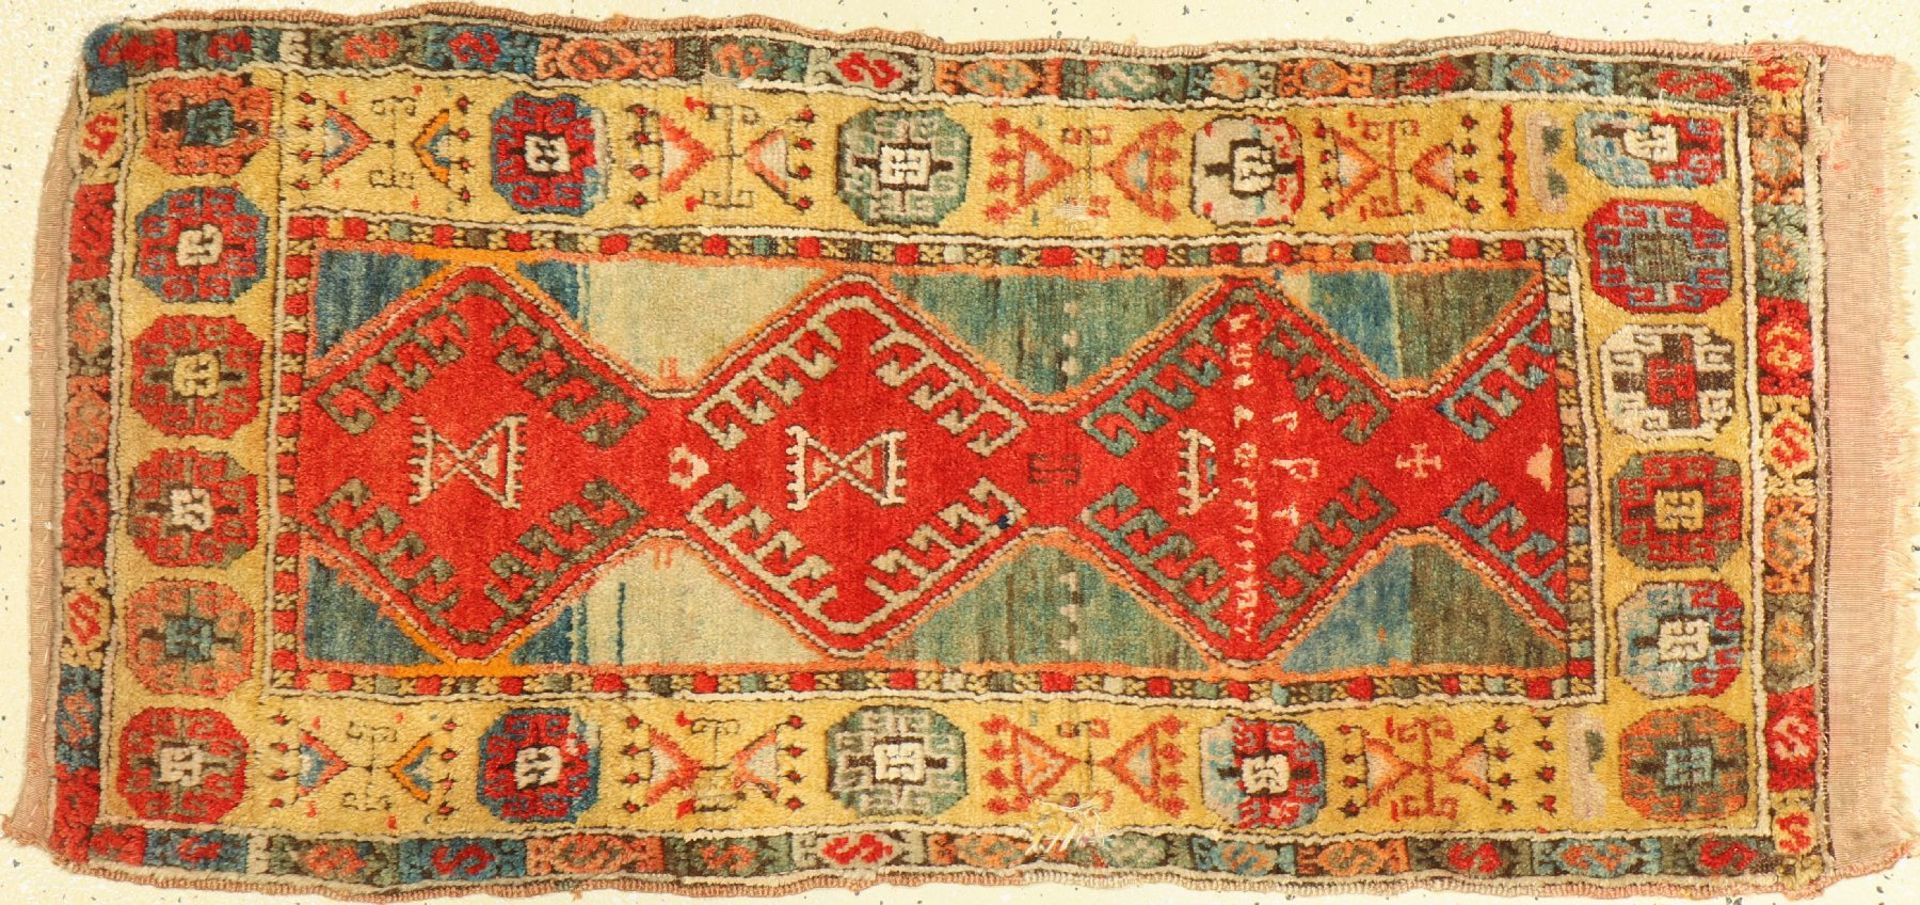 Konya Yastik antik,   Türkei, um 1900, Wolle auf Wolle,